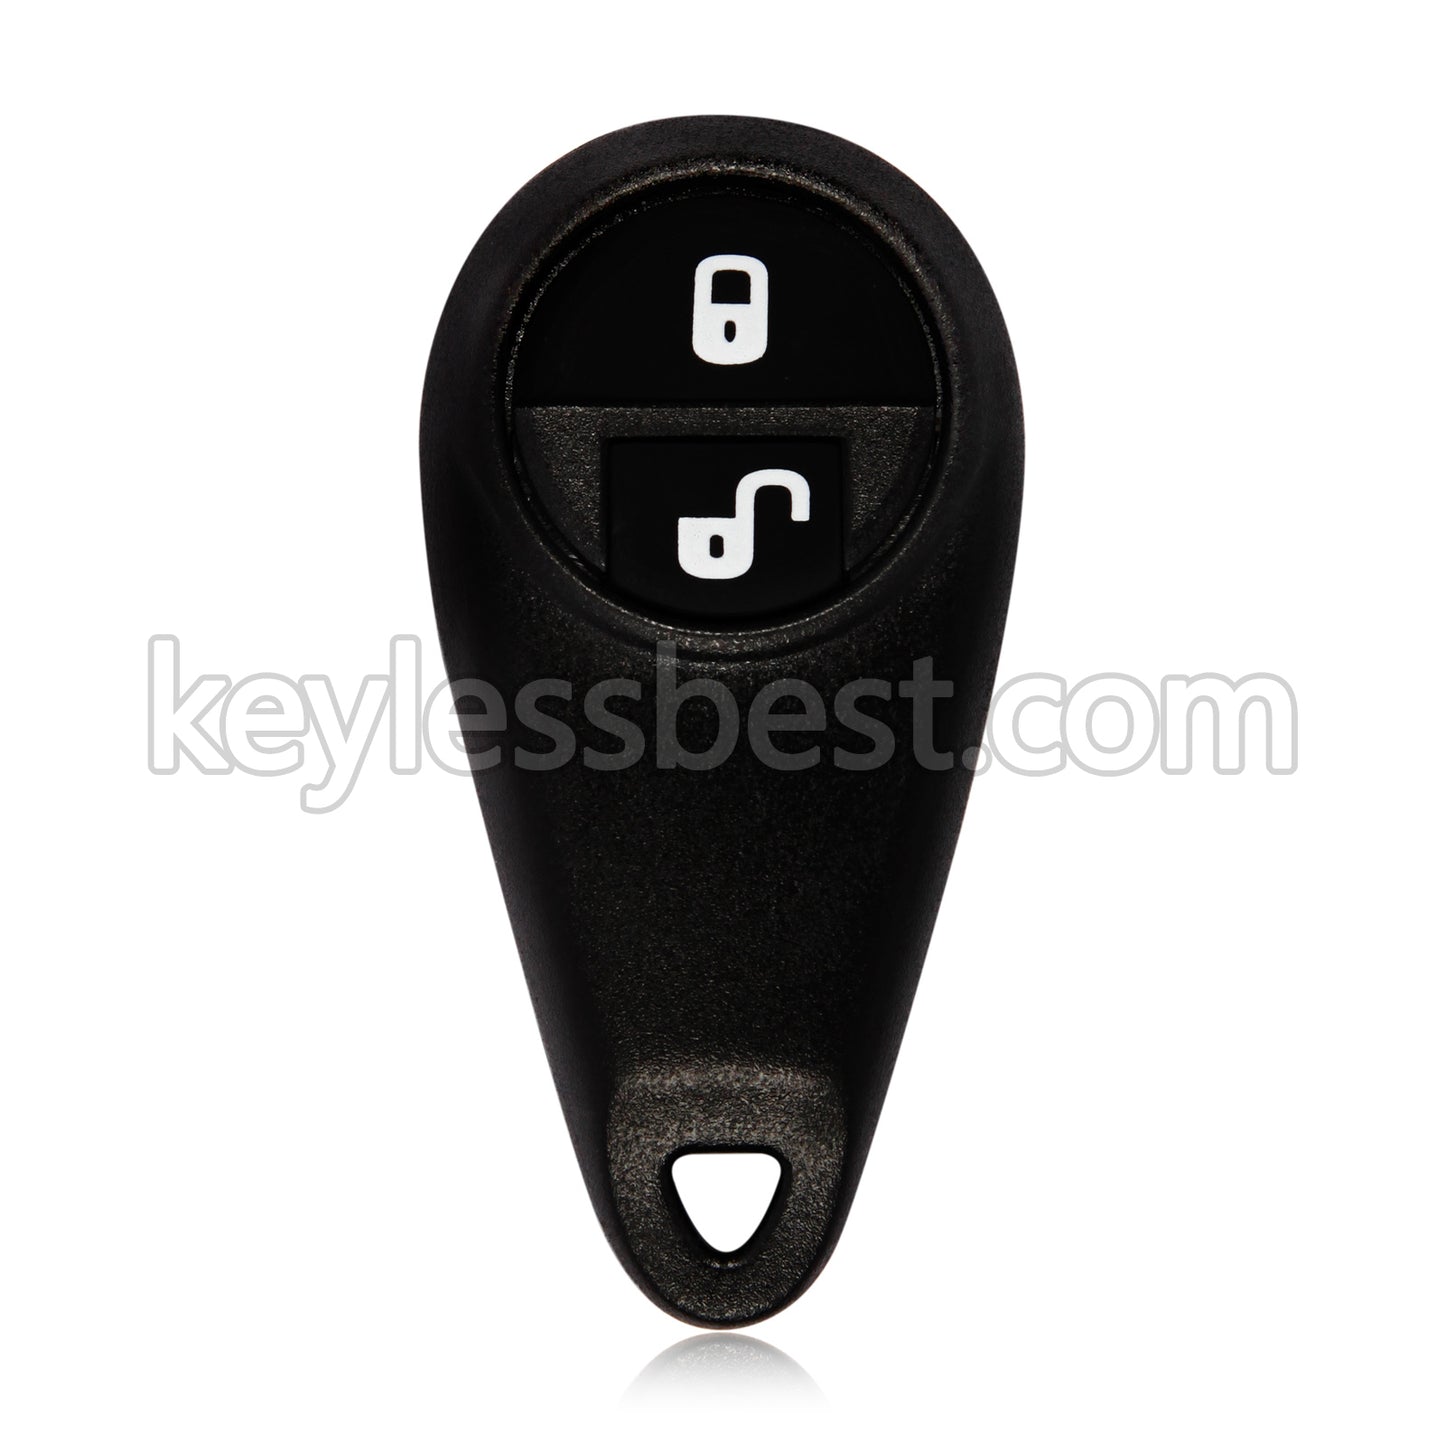 2005 - 2008 Subaru Forester Impreza Legacy / 2 Buttons Remote Key / NHVWB1U711 / 433MHz